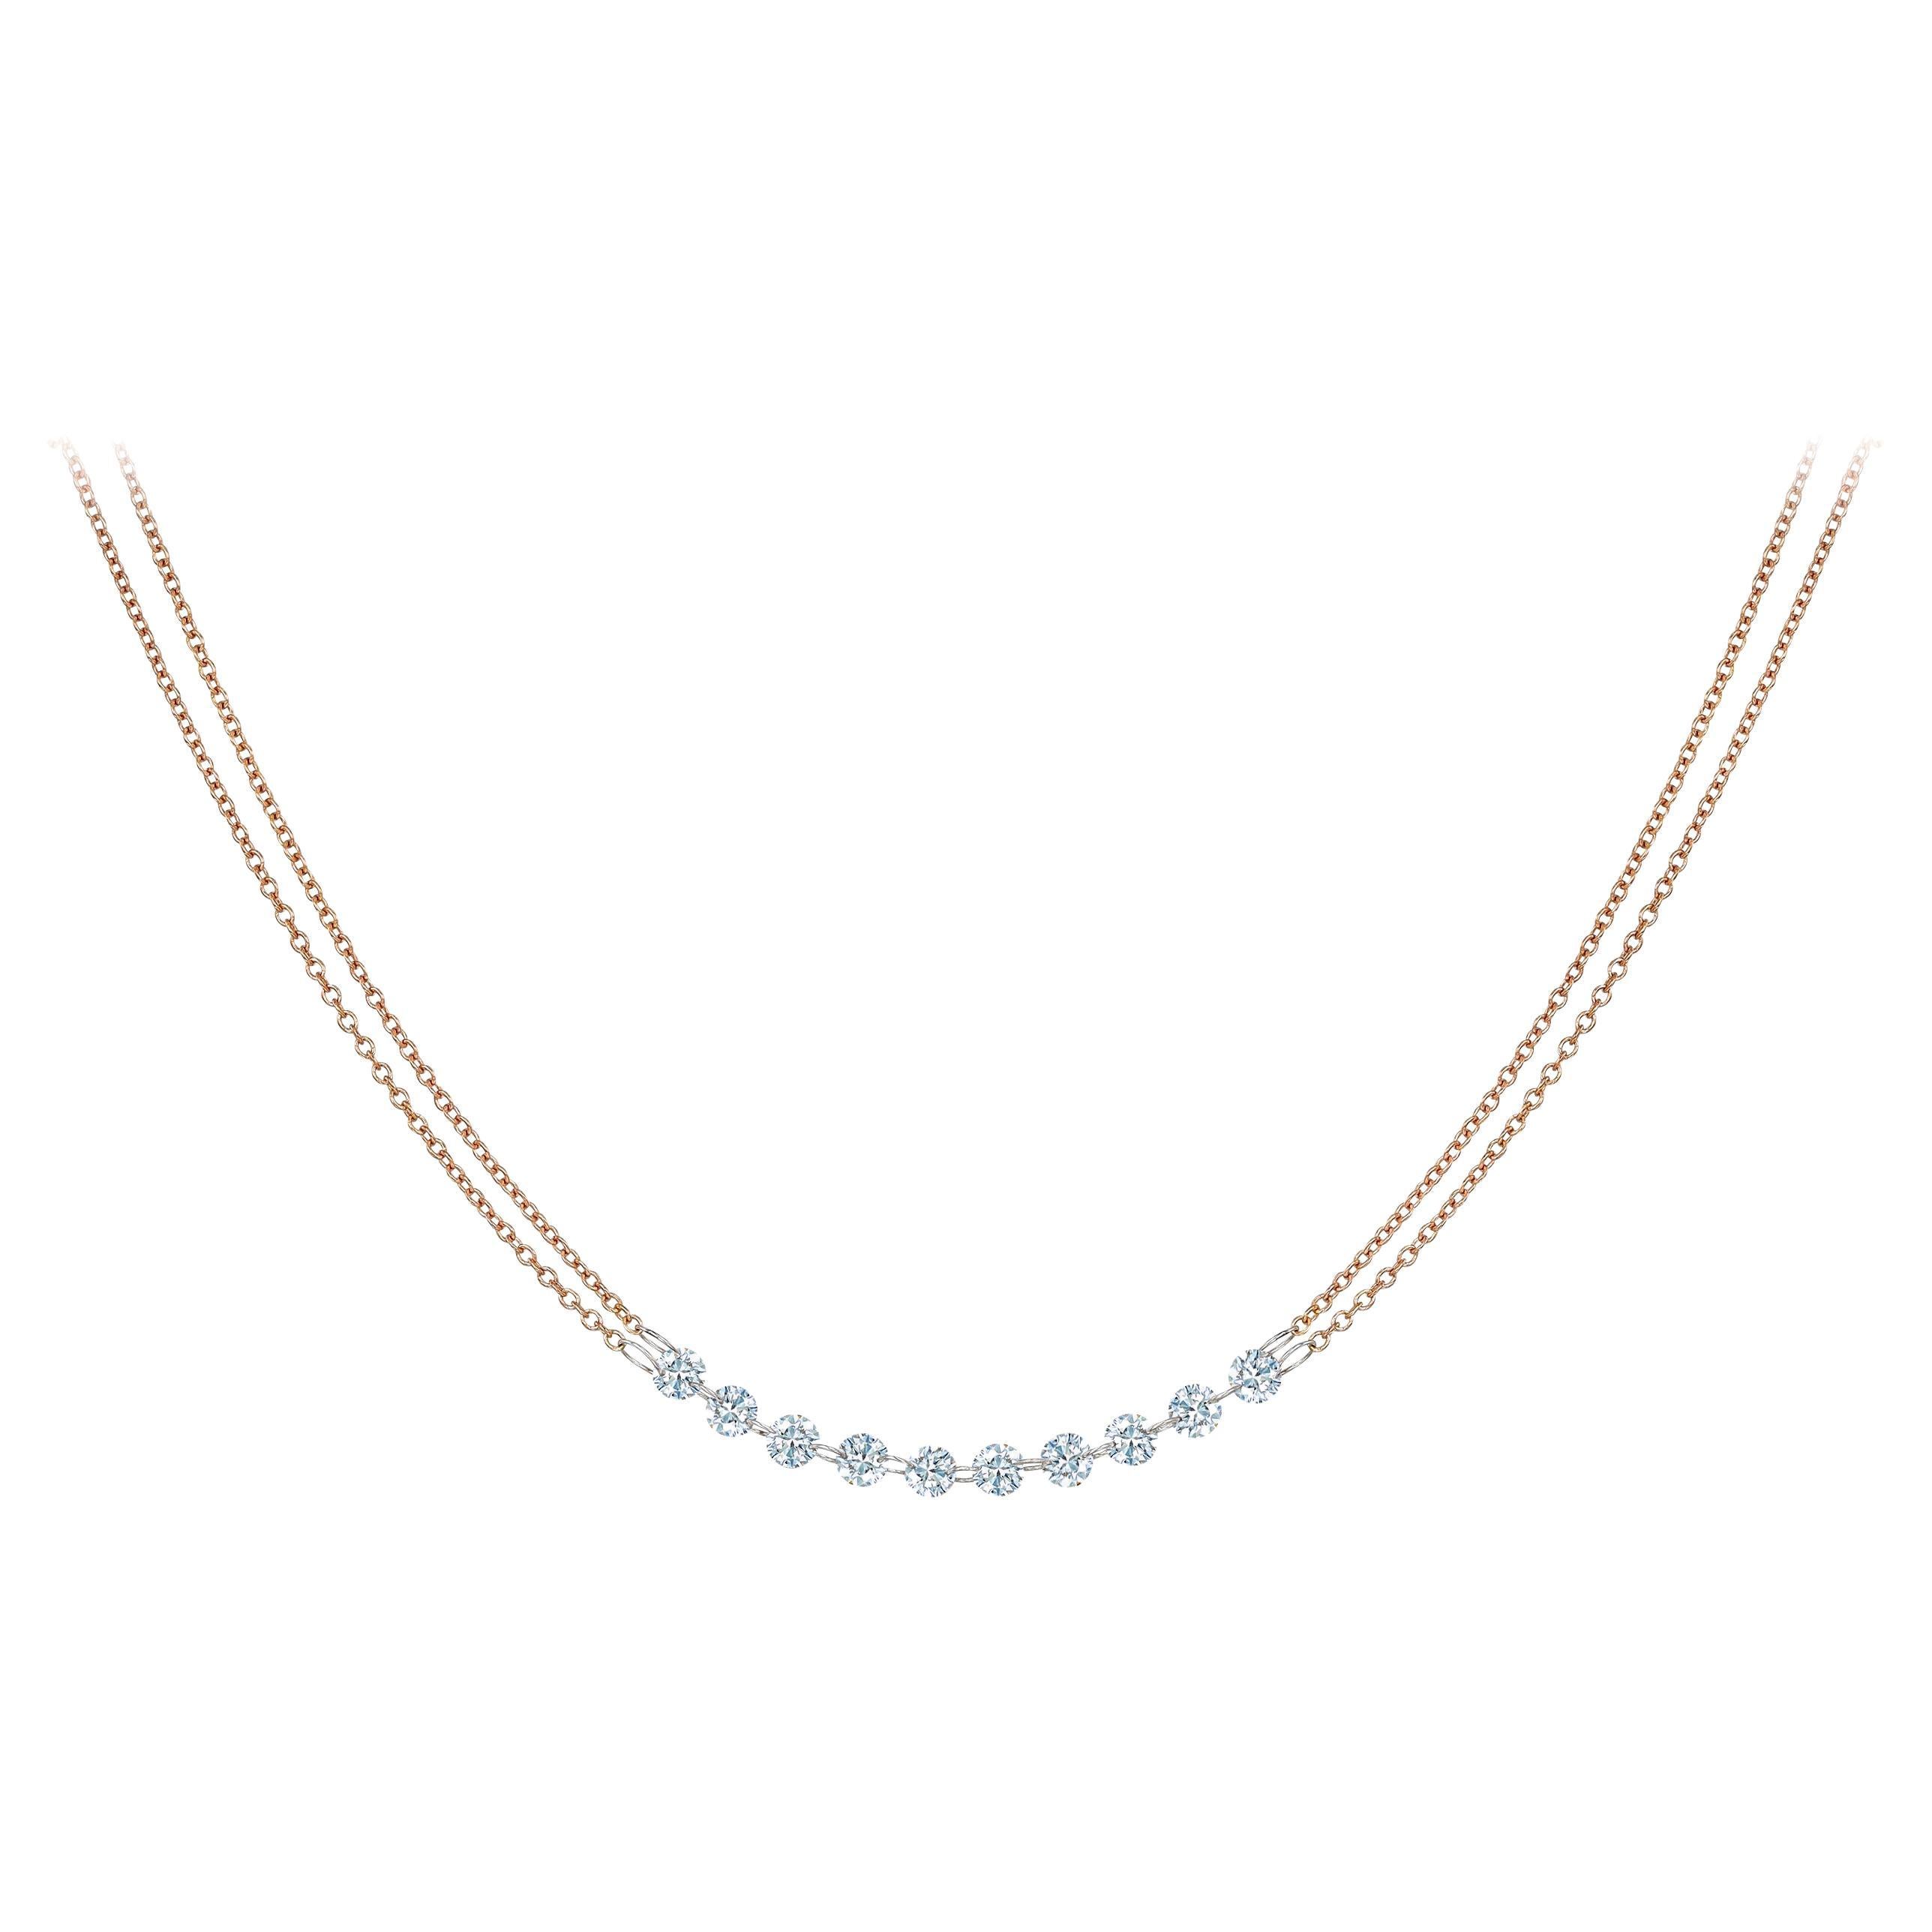 1.00Carat Diamond Necklace Chain Choker